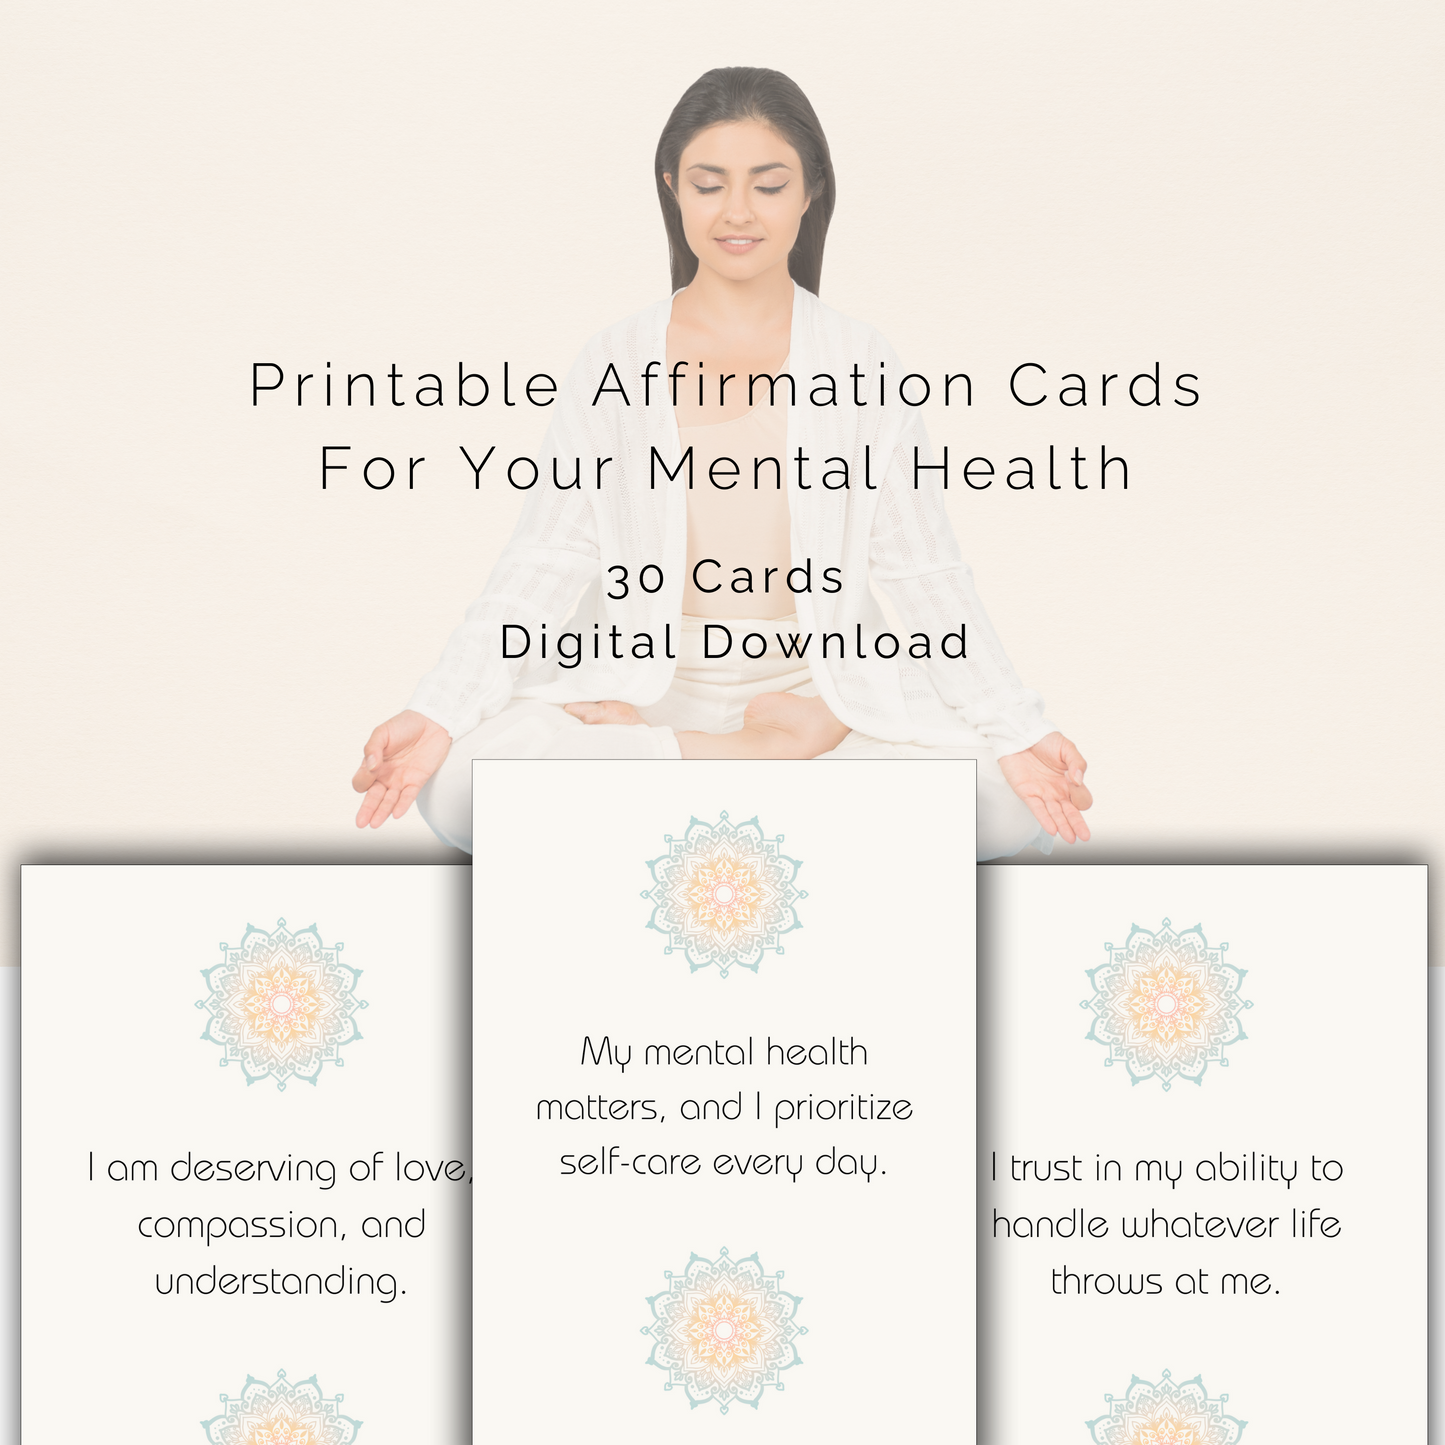 Printable Affirmation Cards For Mental Health